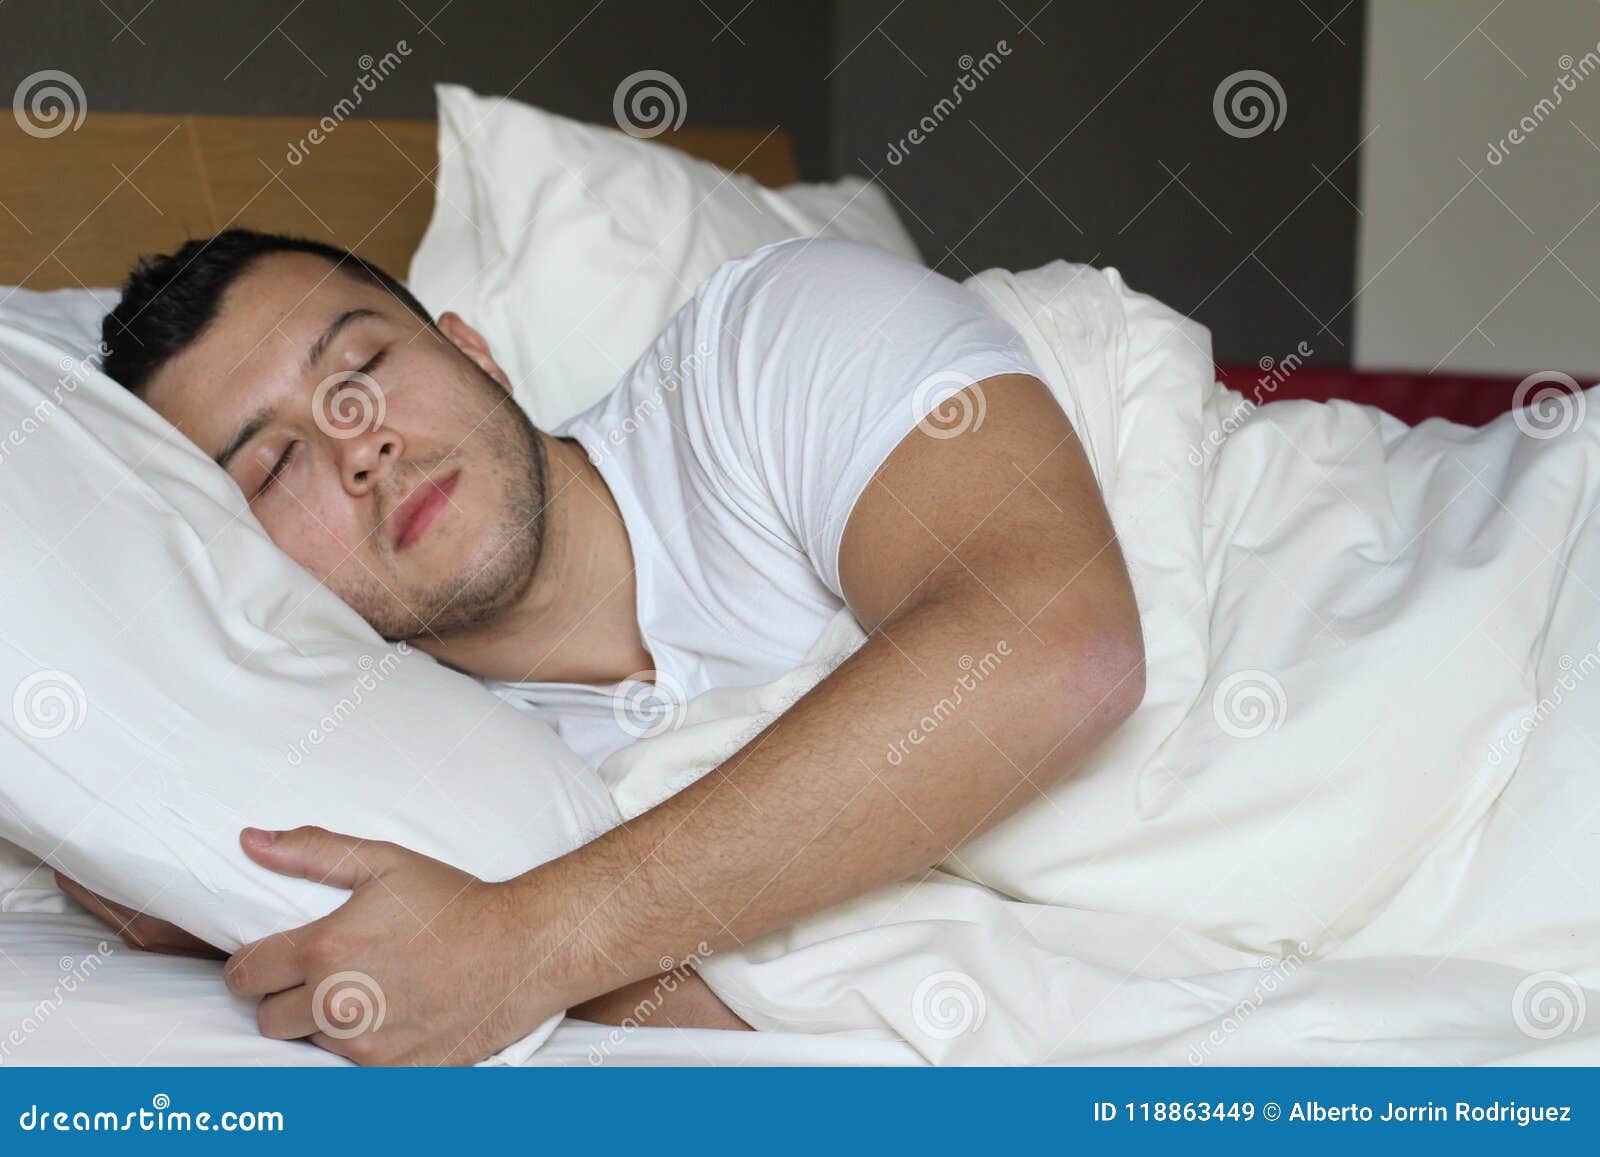 ethnic male sleeping in comfortable position